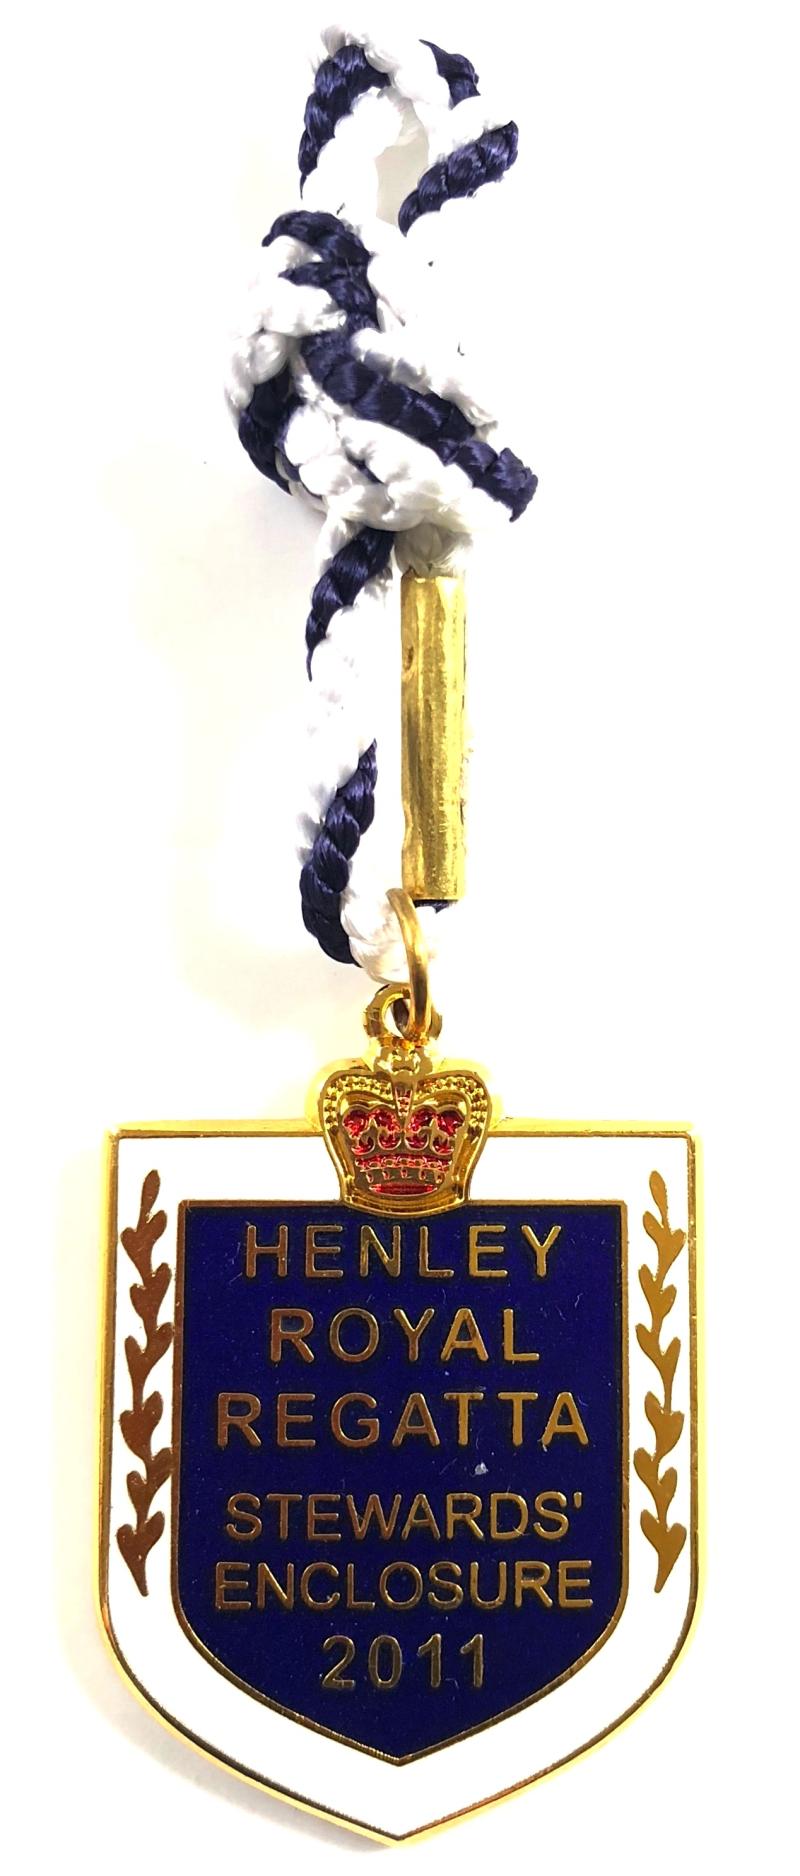 2011 Henley Royal Regatta stewards enclosure badge